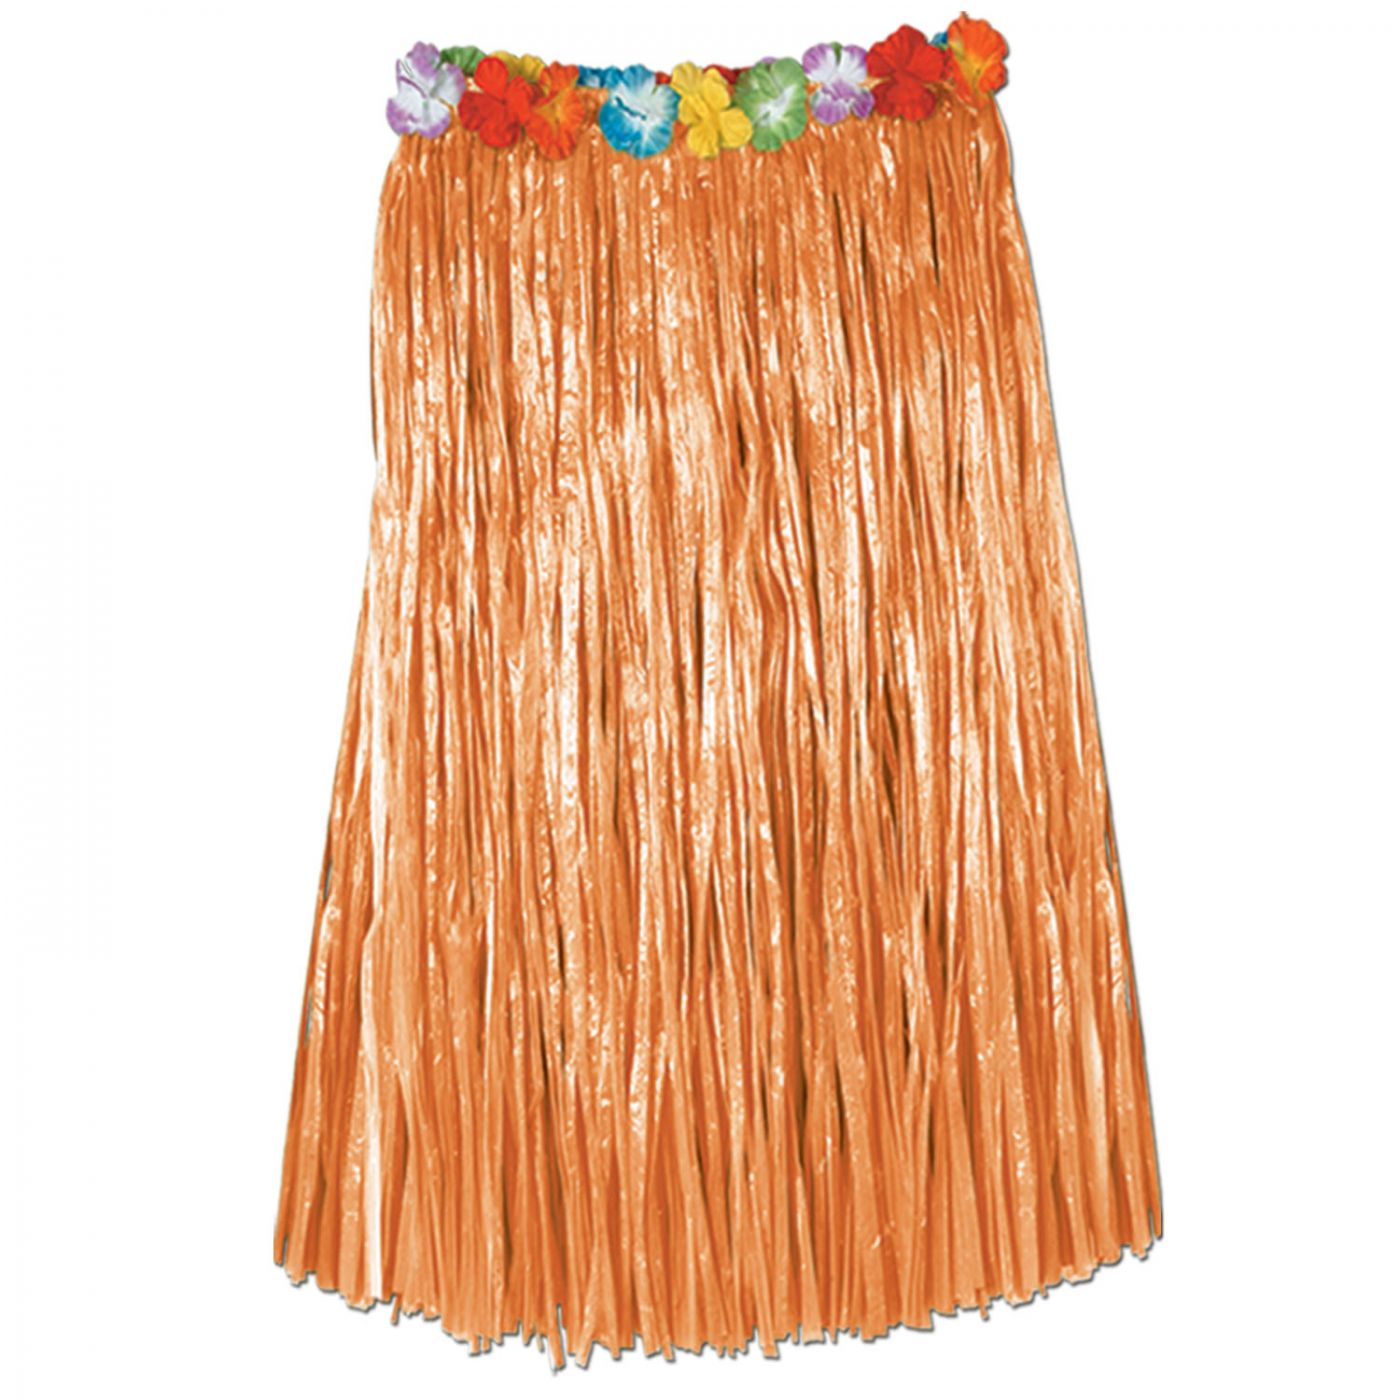 Adult Artificial Grass Hula Skirt image